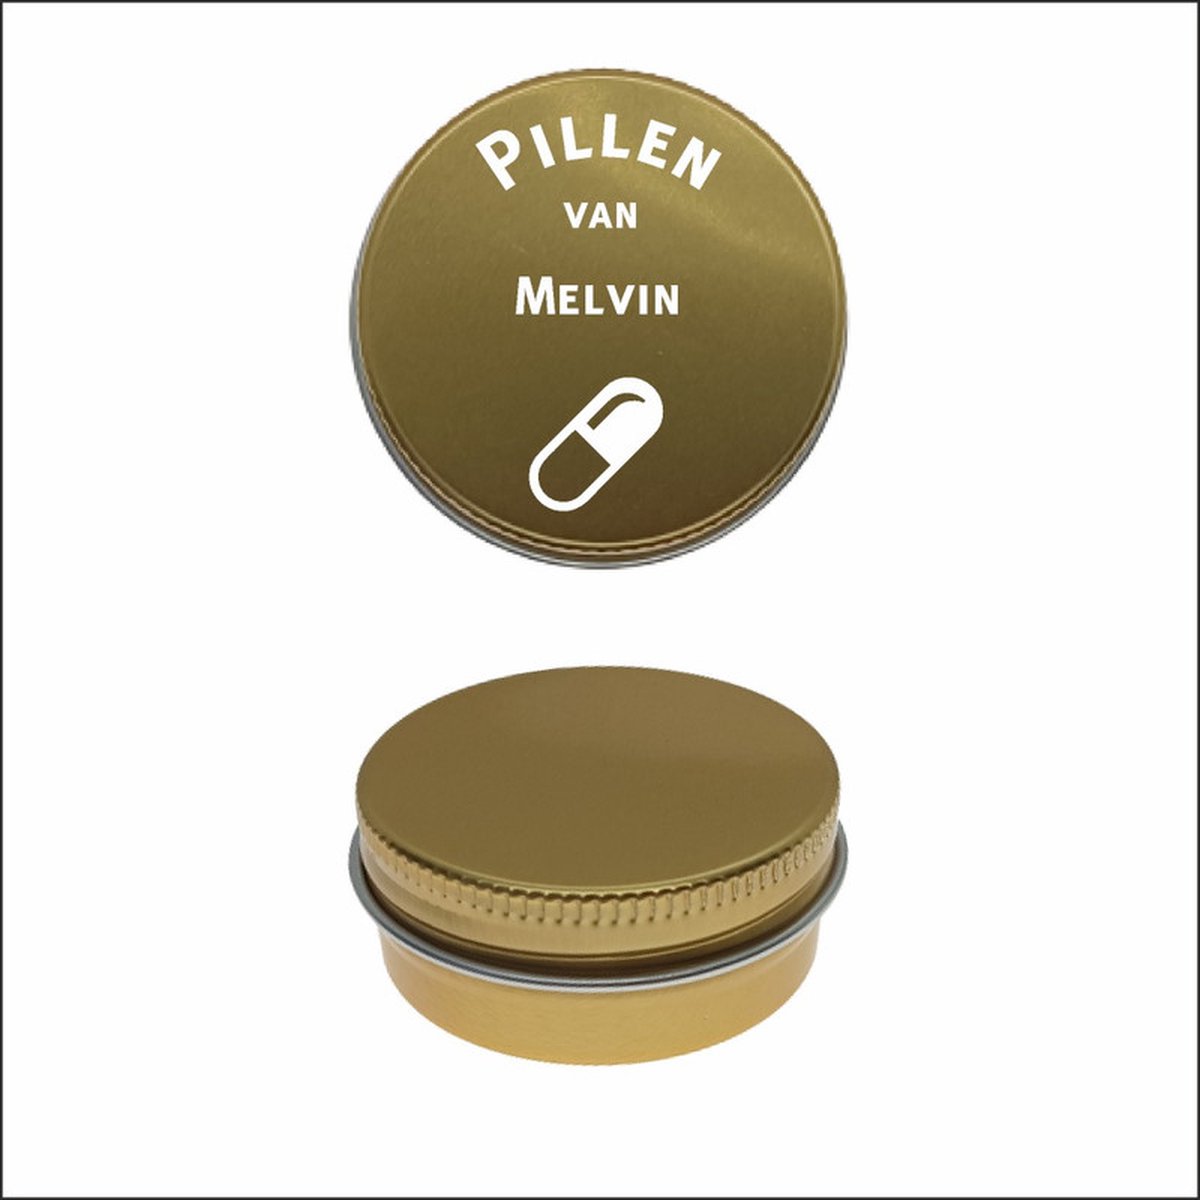 Pillen Blikje Met Naam Gravering - Melvin